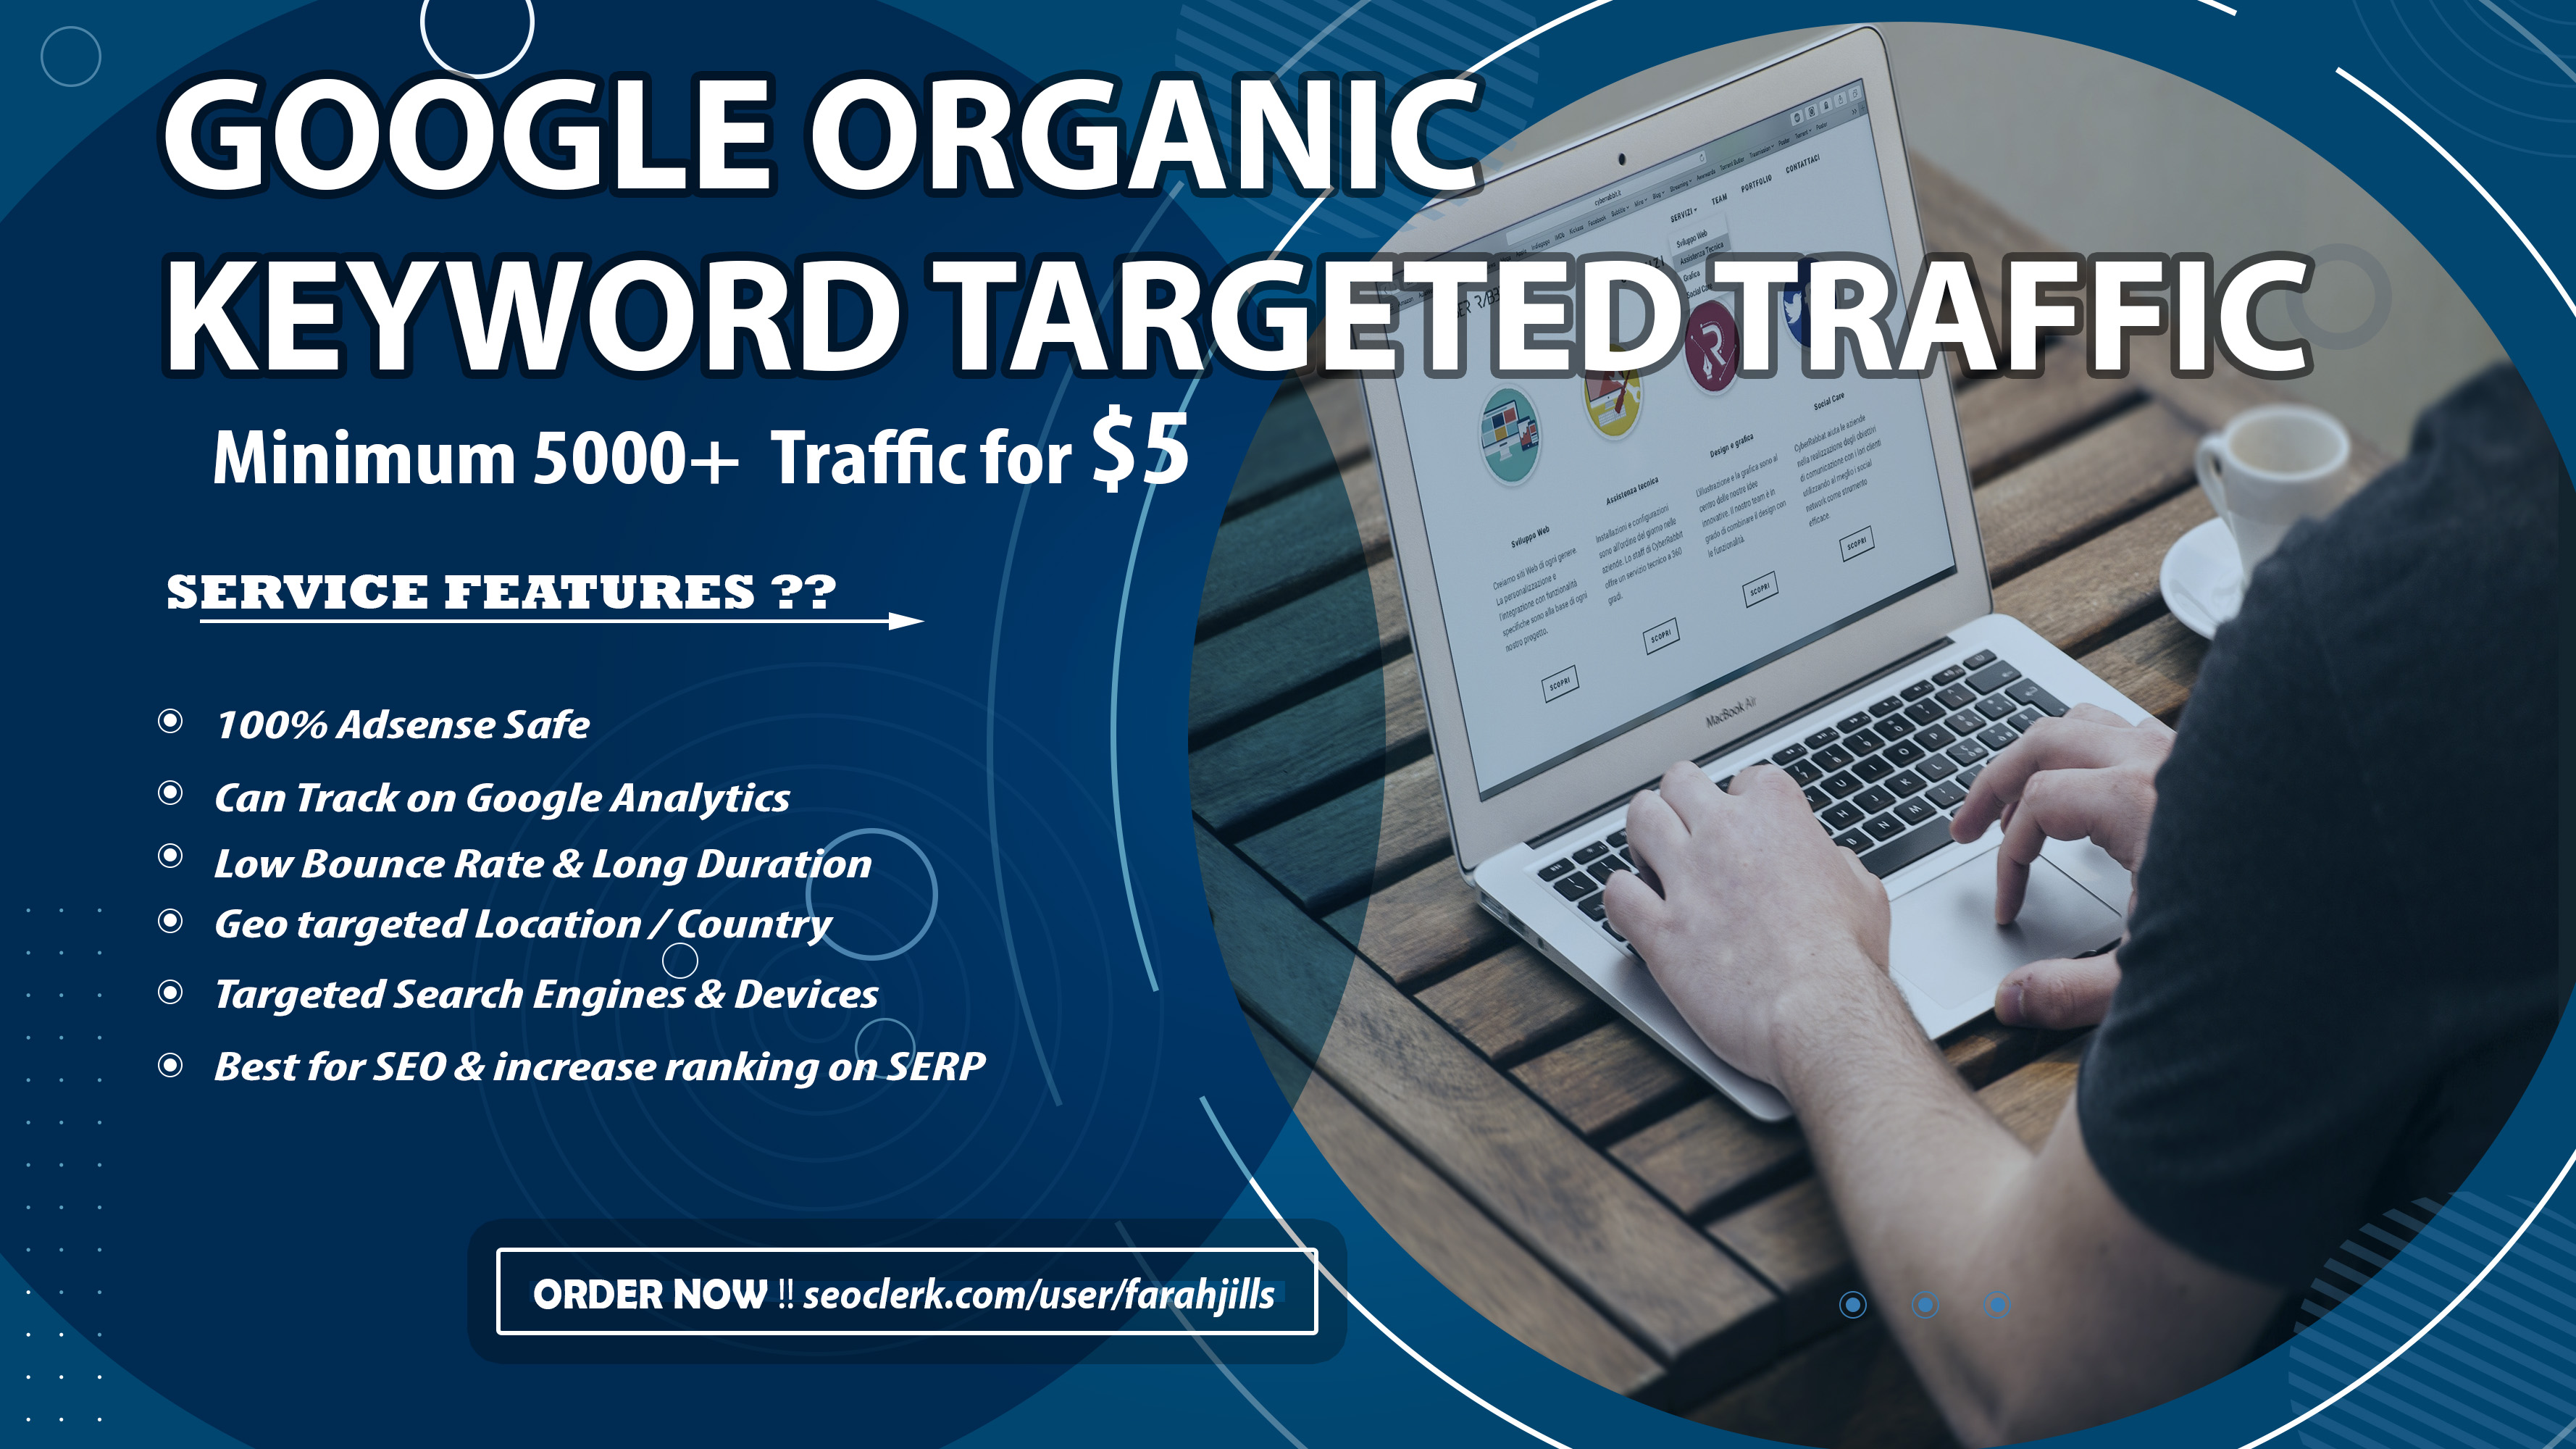 5K Keyword Targeted Google Organic Web TRAFFIC